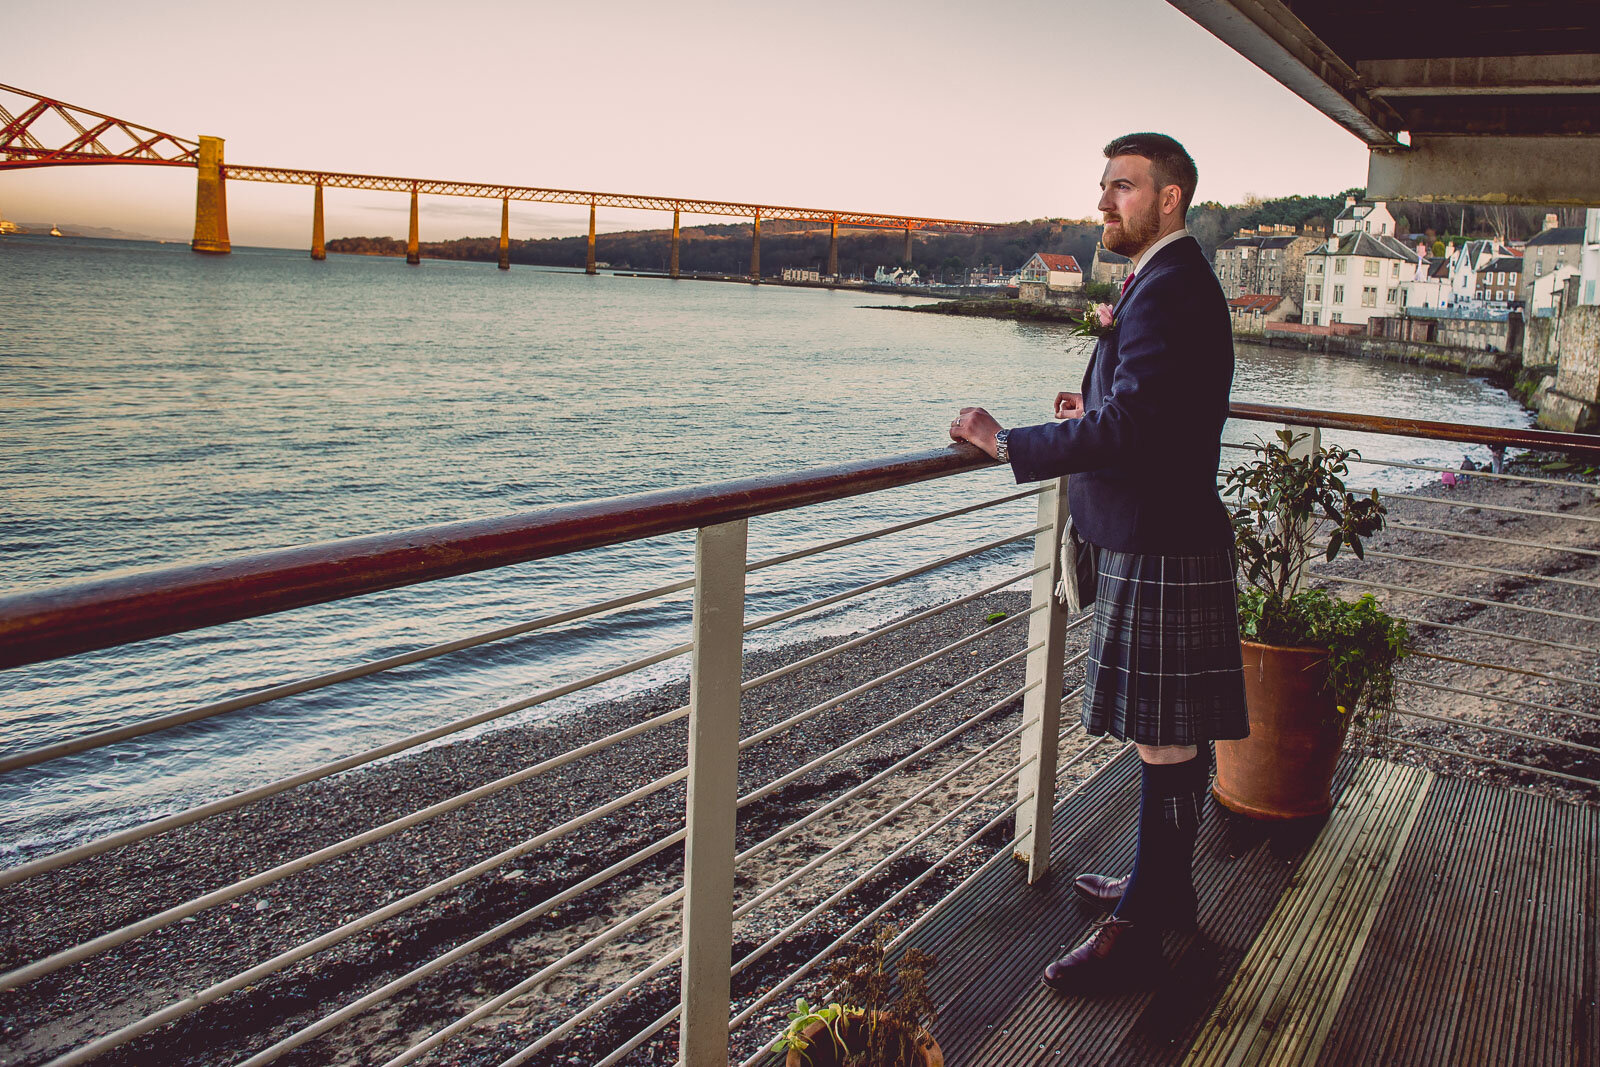 wedding photography scotland